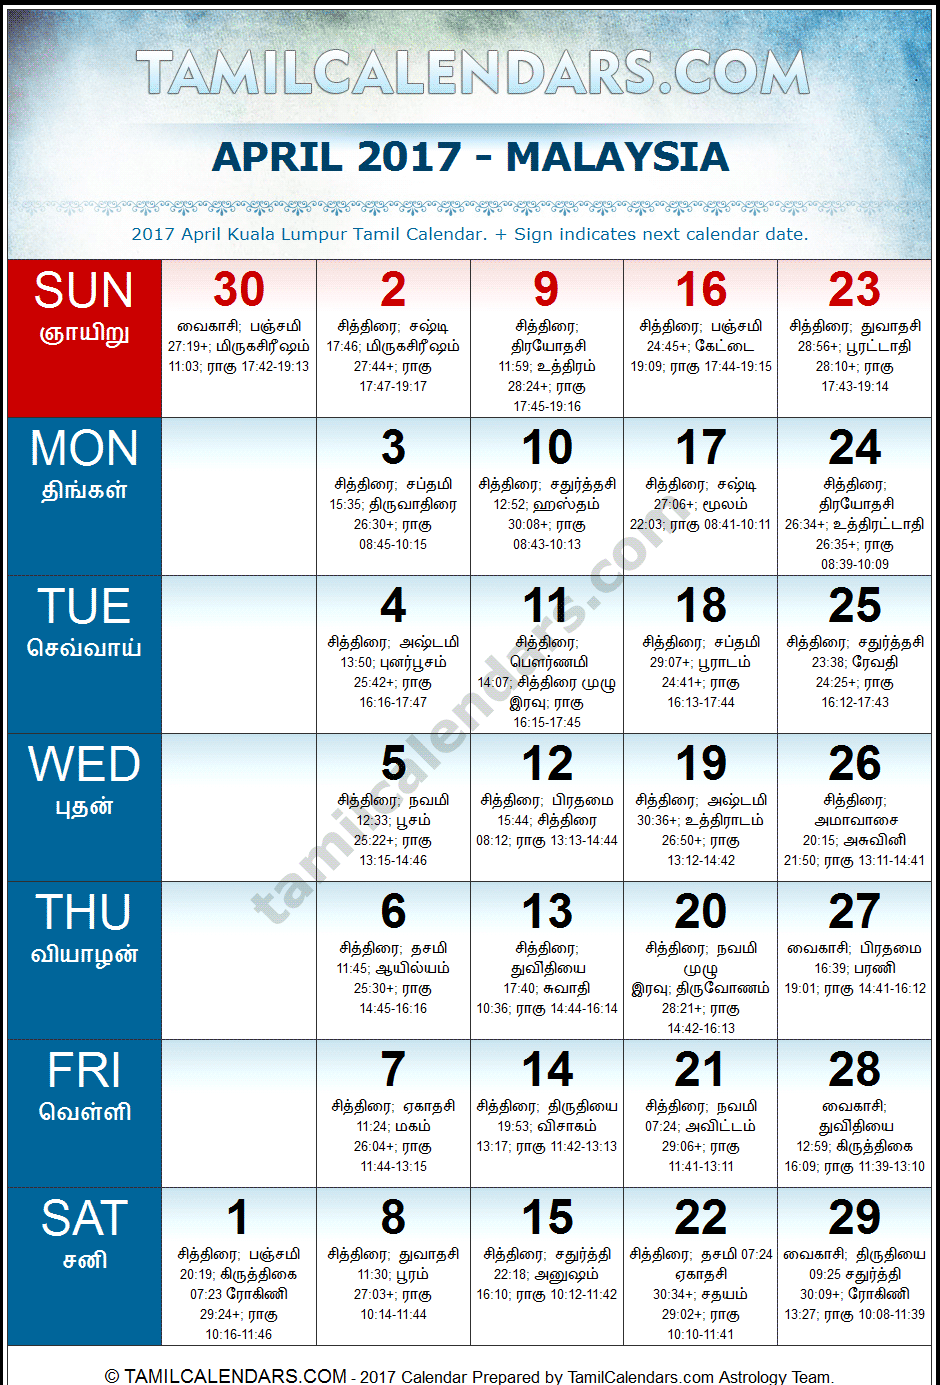 April 2017 Tamil Calendar for Malaysia (Kuala Lumpur)